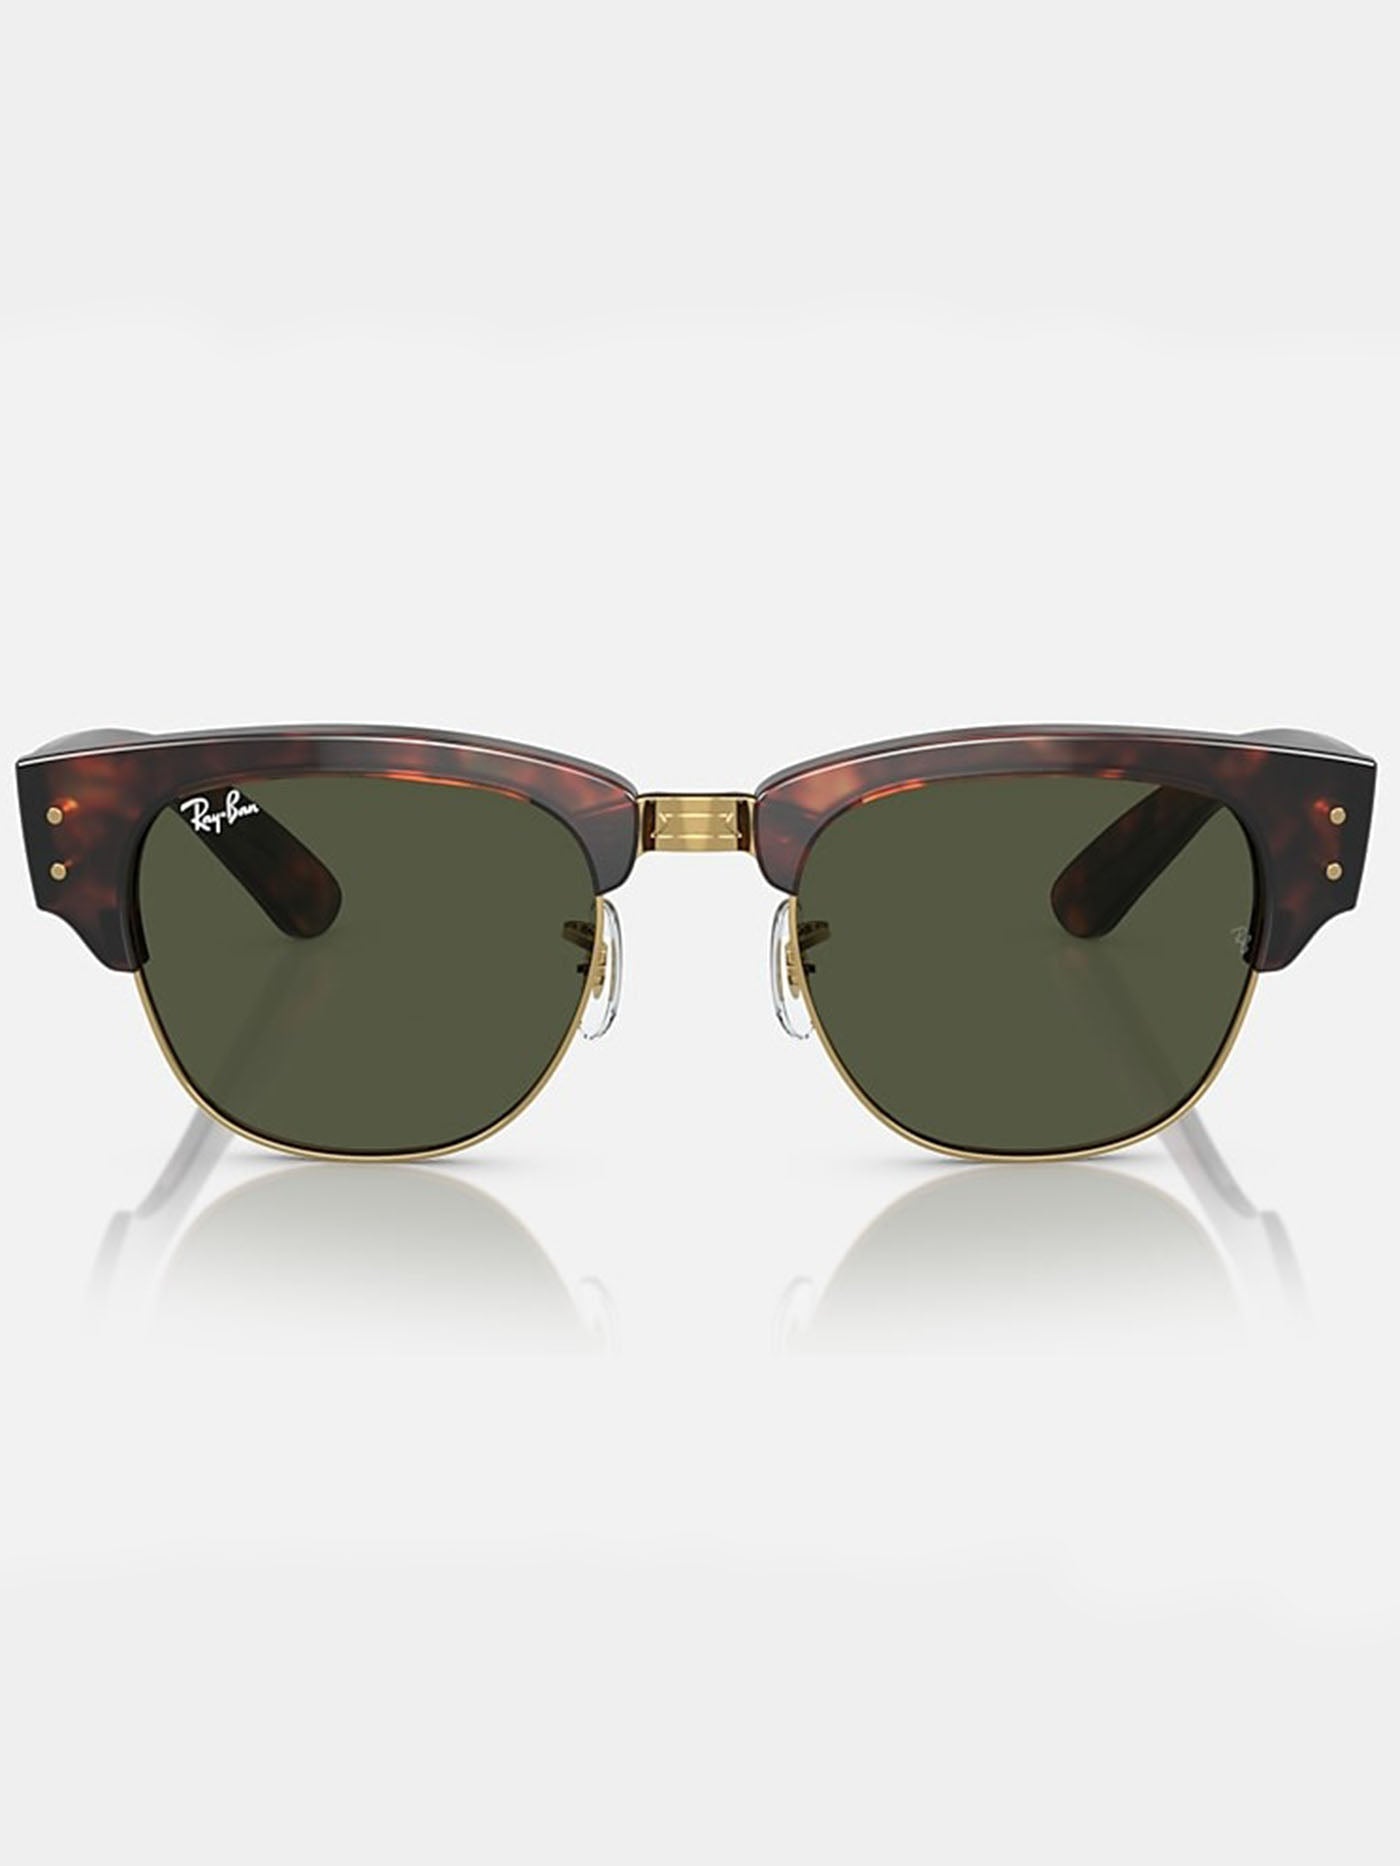 Ray Ban 2024 Mega Clubmaster Tortoise On Gold/Green Classic G-15 Sunglasses